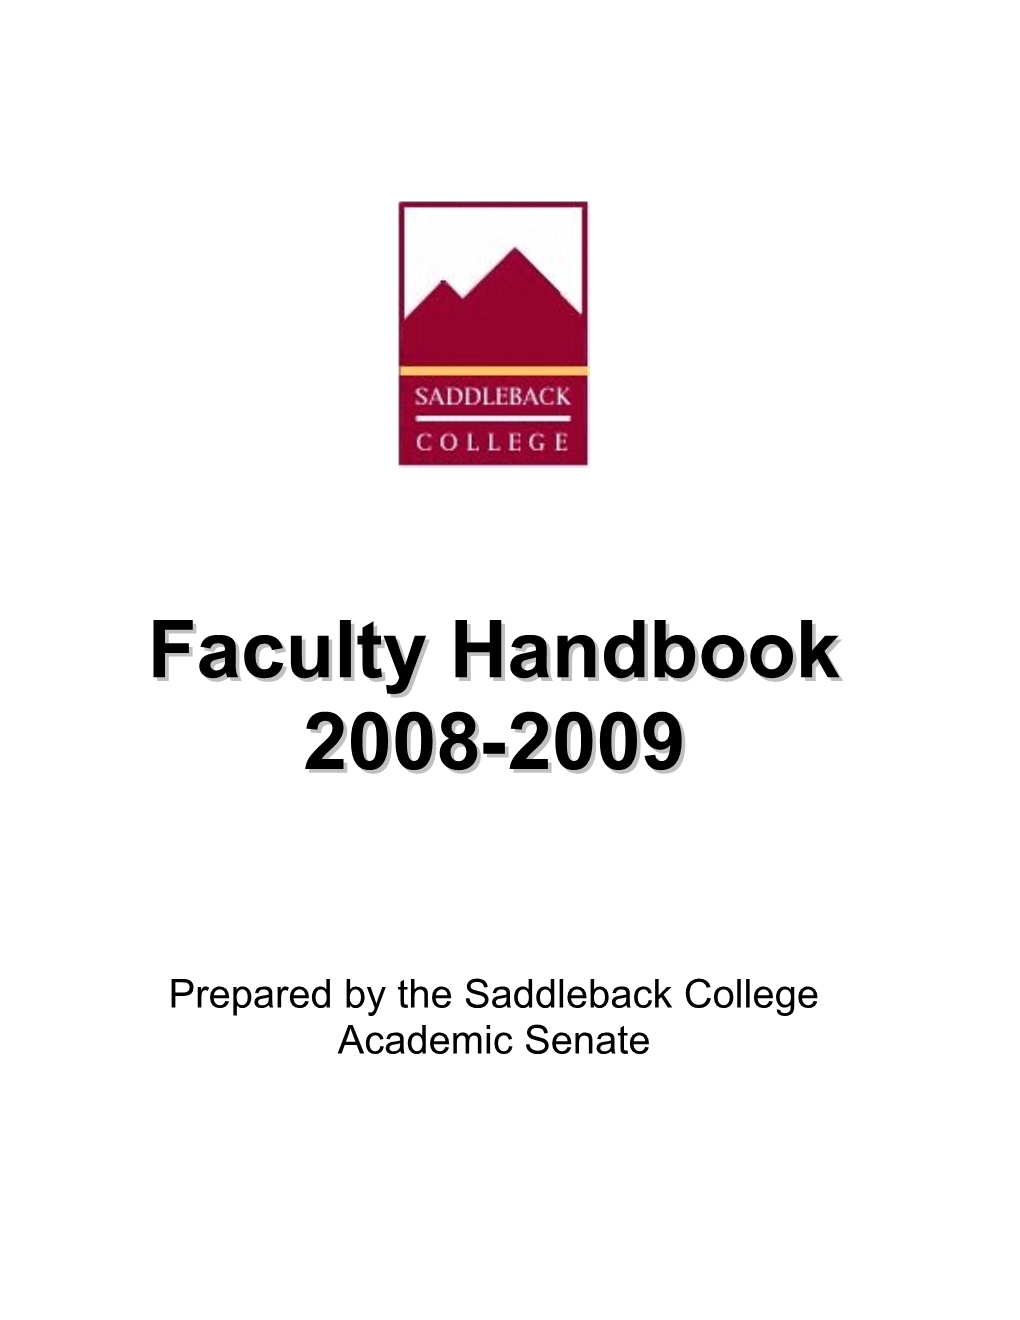 Faculty Handbook, 2008-2009